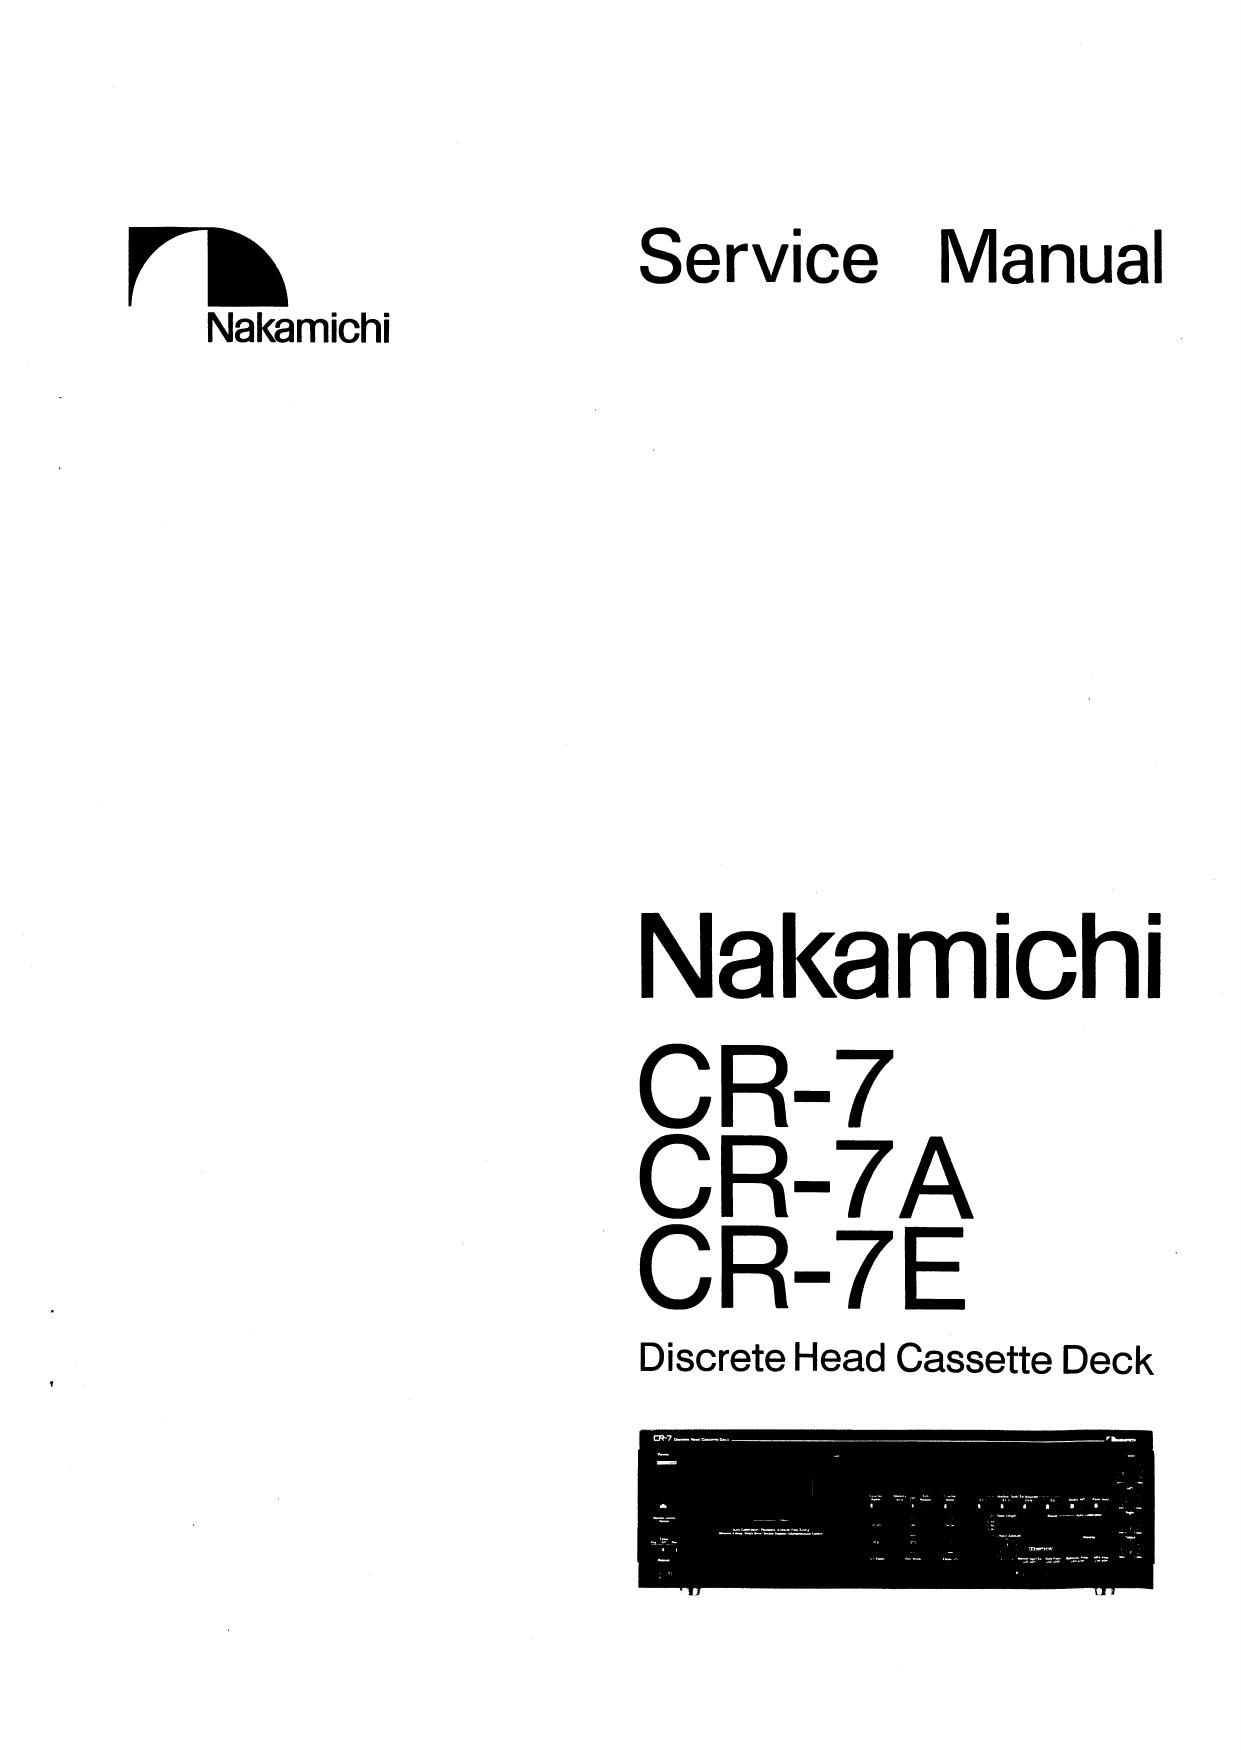 Nakamichi CR 7 A Service Manual